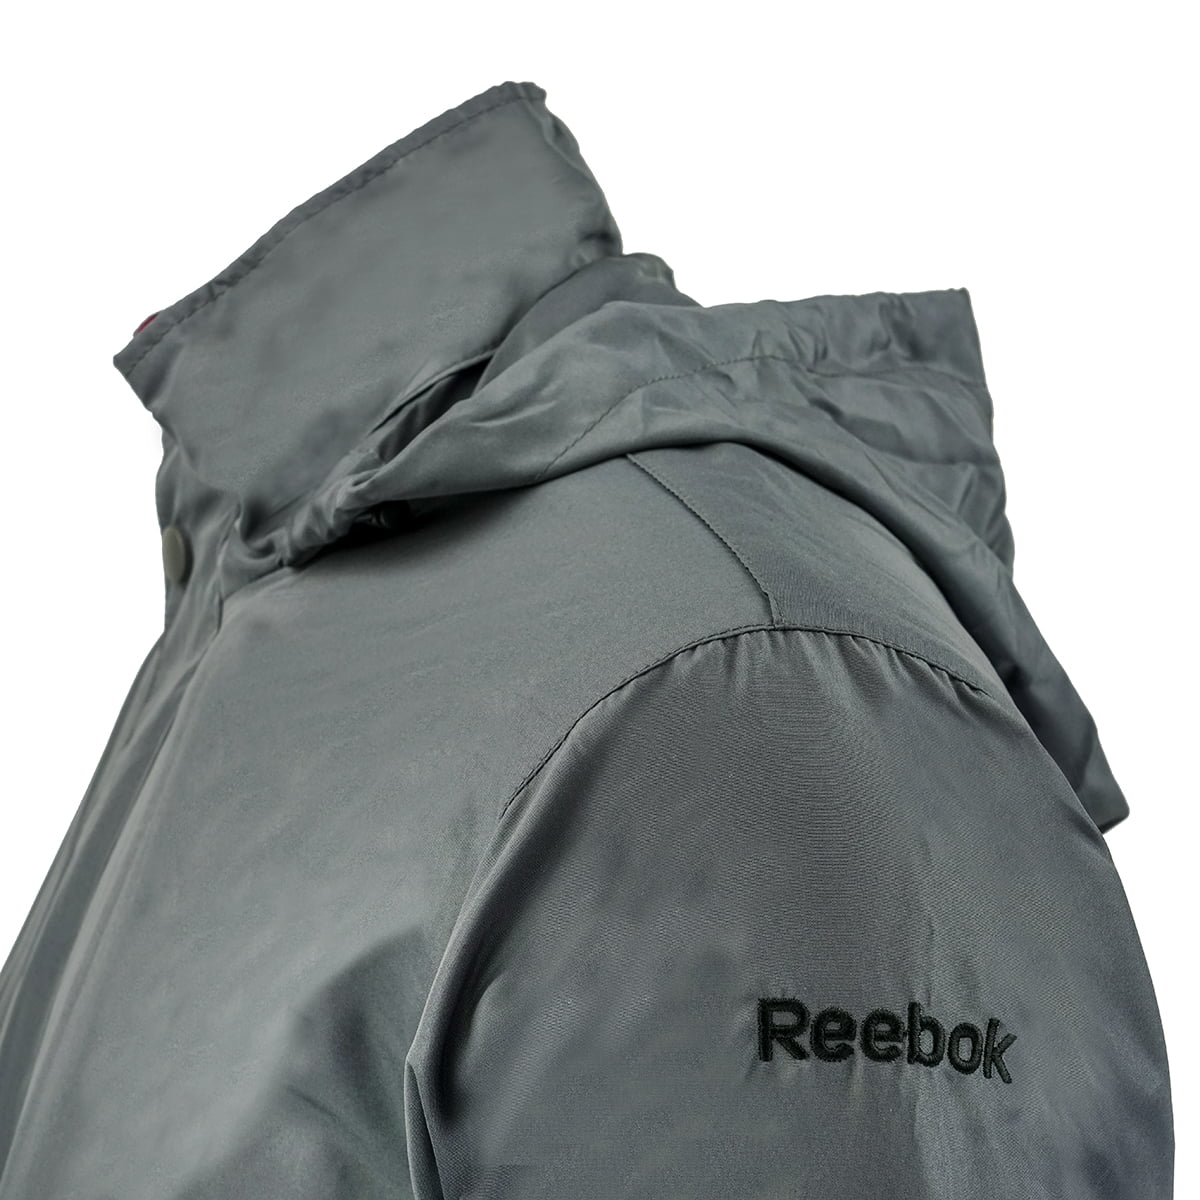 reebok men's glacier jacket review